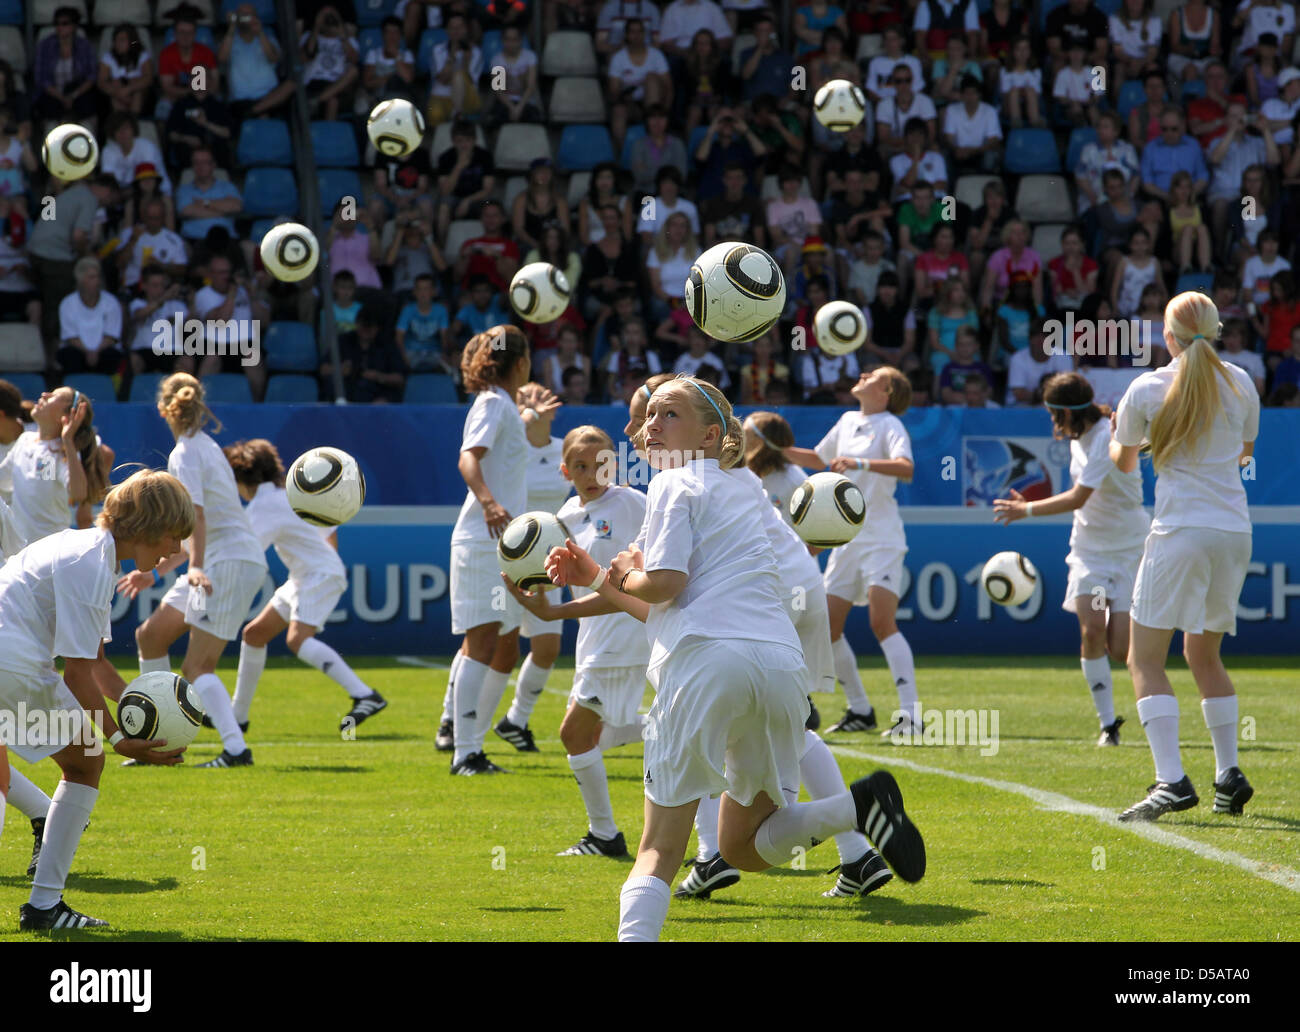 Fußball Frauen U20 Wm Banque d'image et photos - Alamy